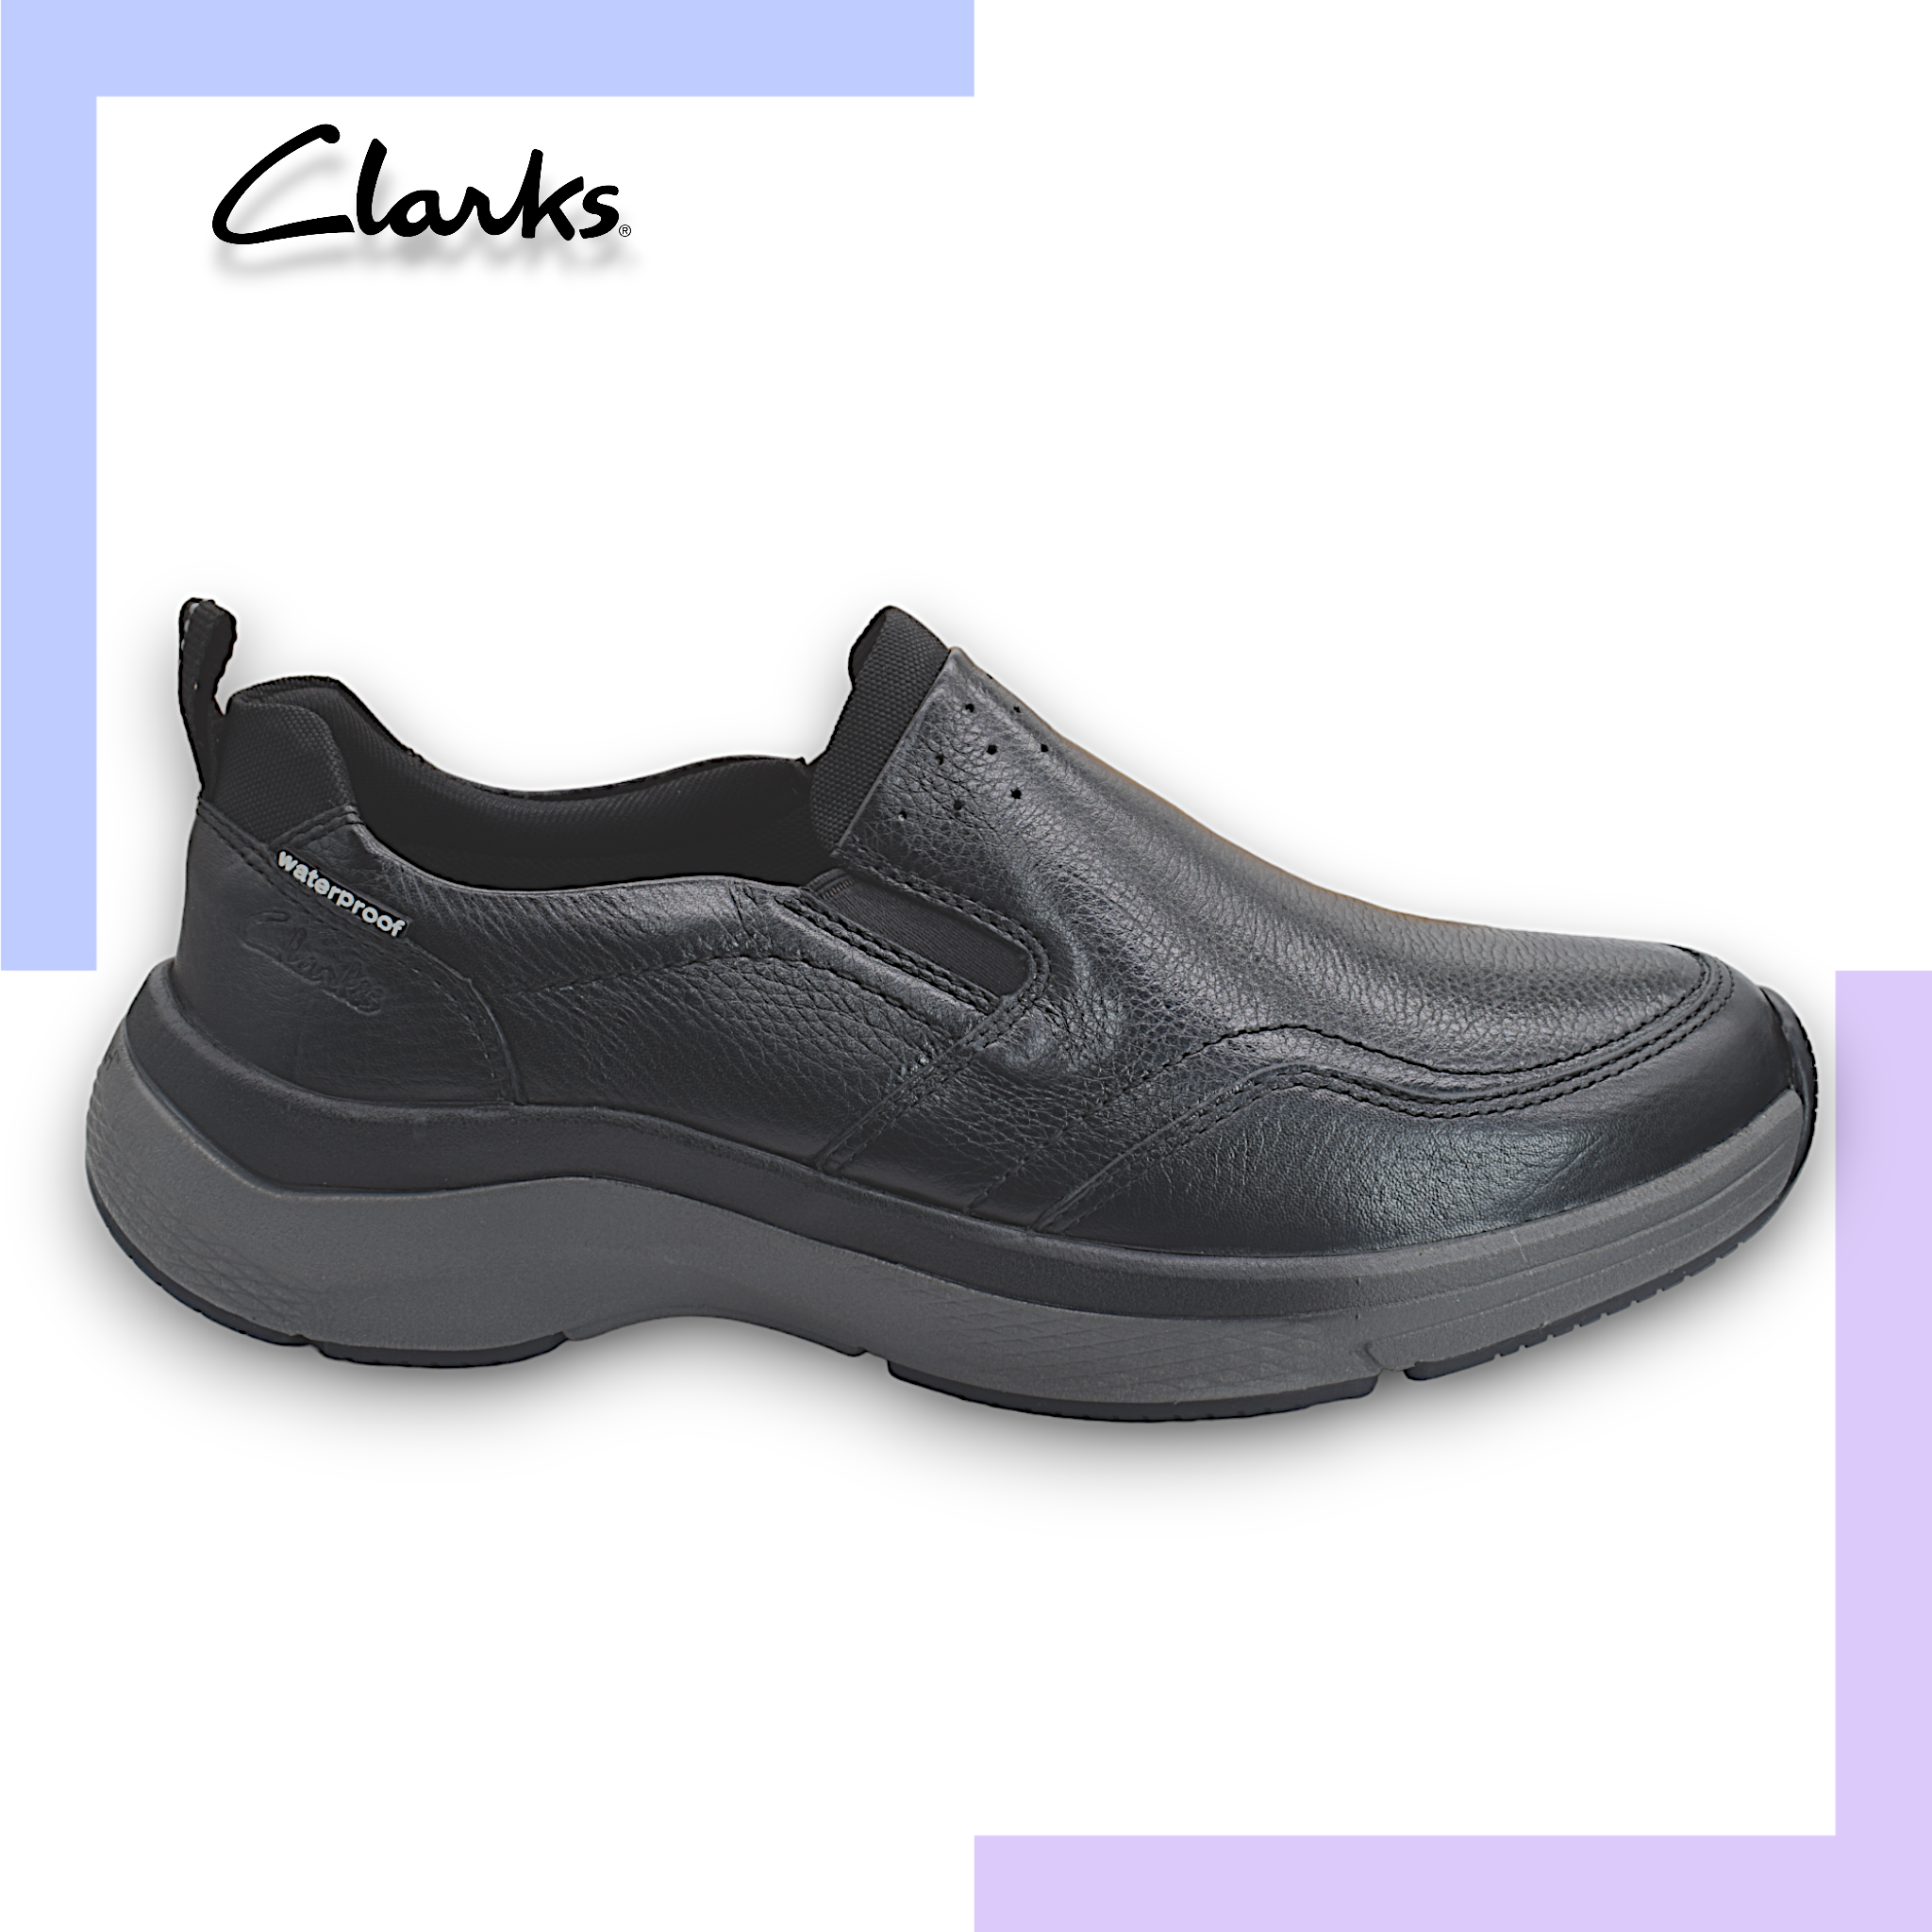 Clarks Black Men's Shoes Walker Series 23 waterproof 13285 - Live Life ...